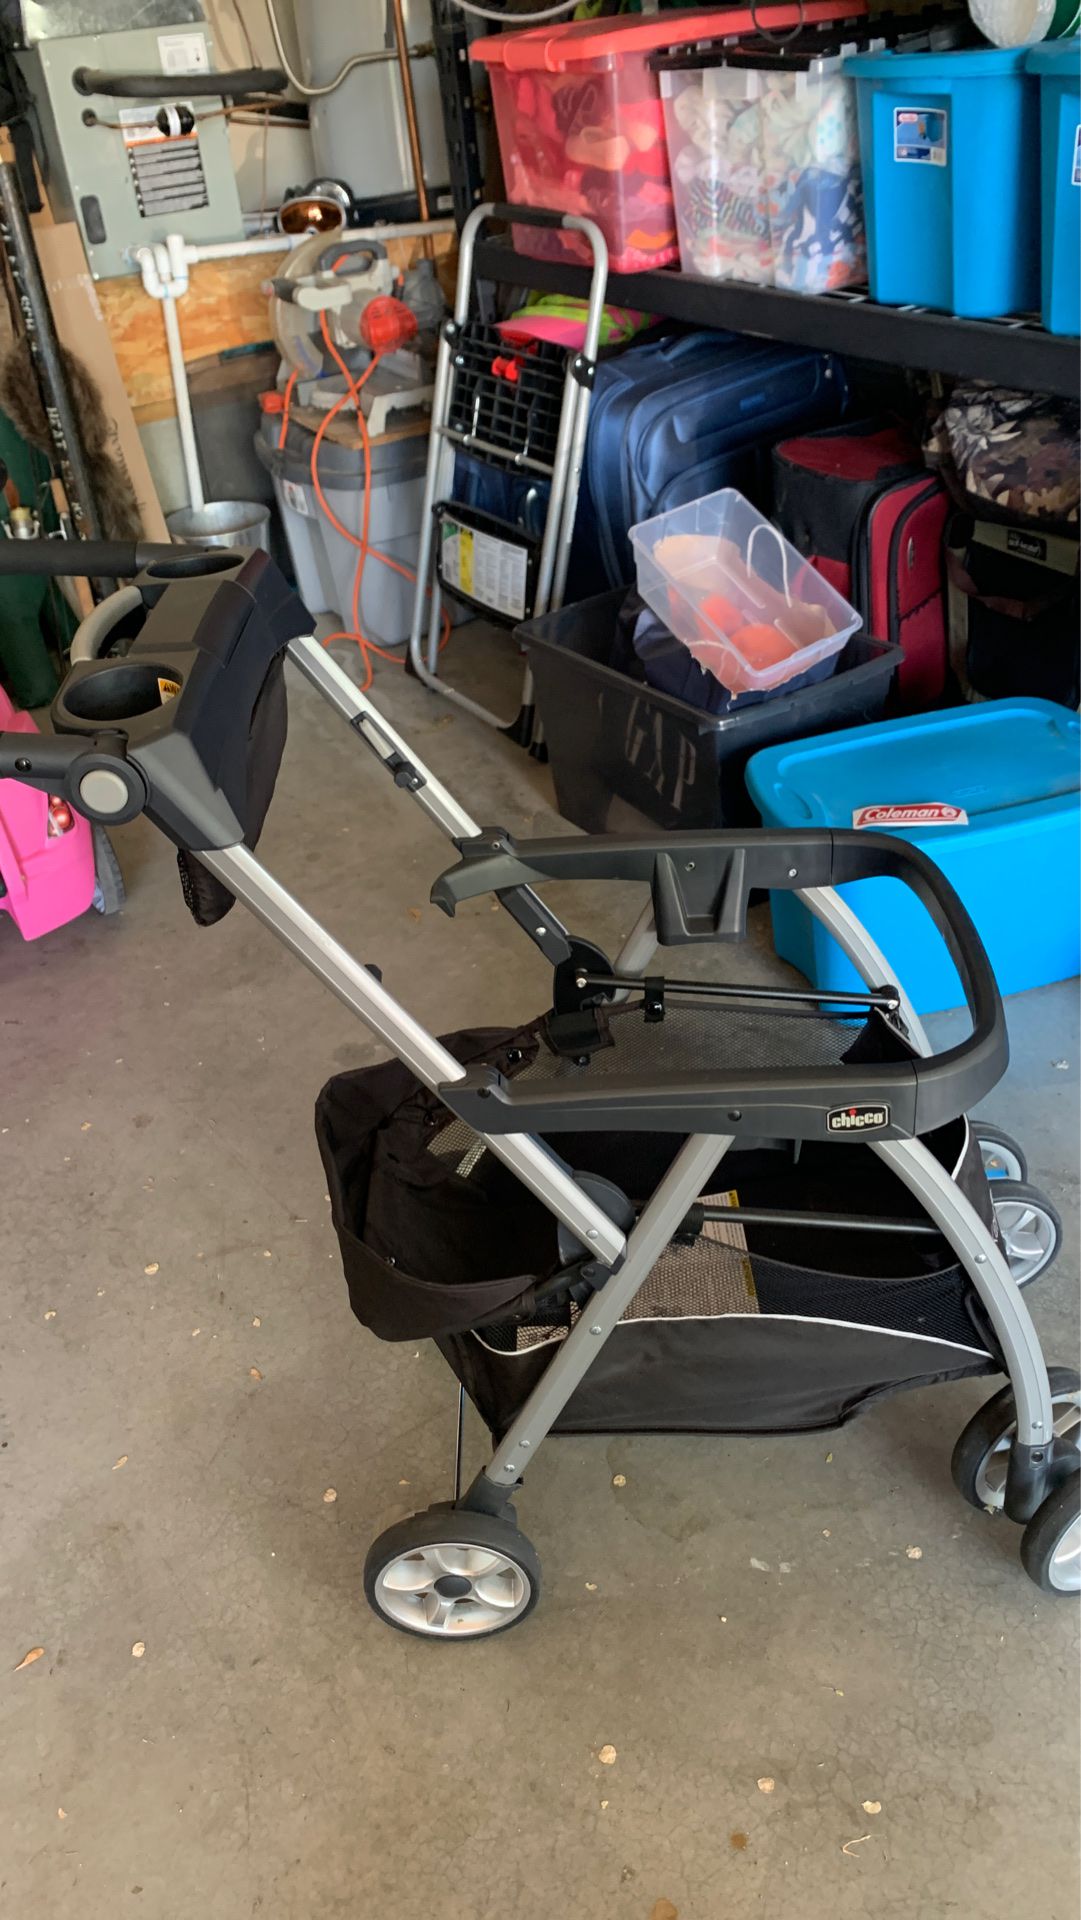 Chicco KeyFit Caddy “pop up” stroller